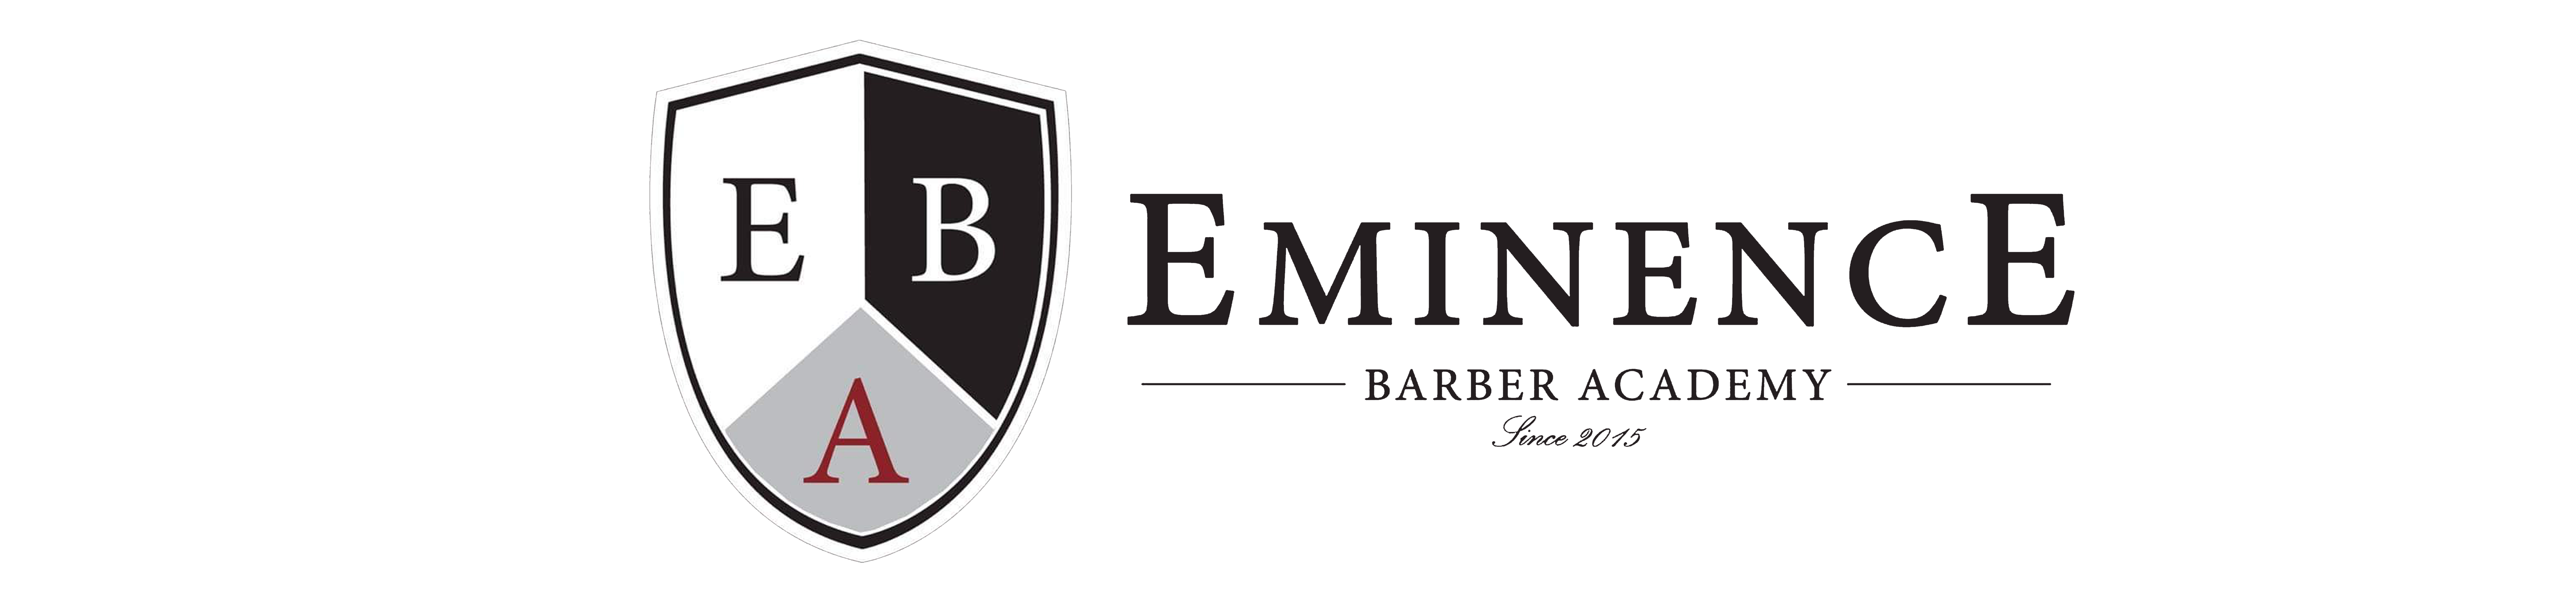 Eminence Barber Academy